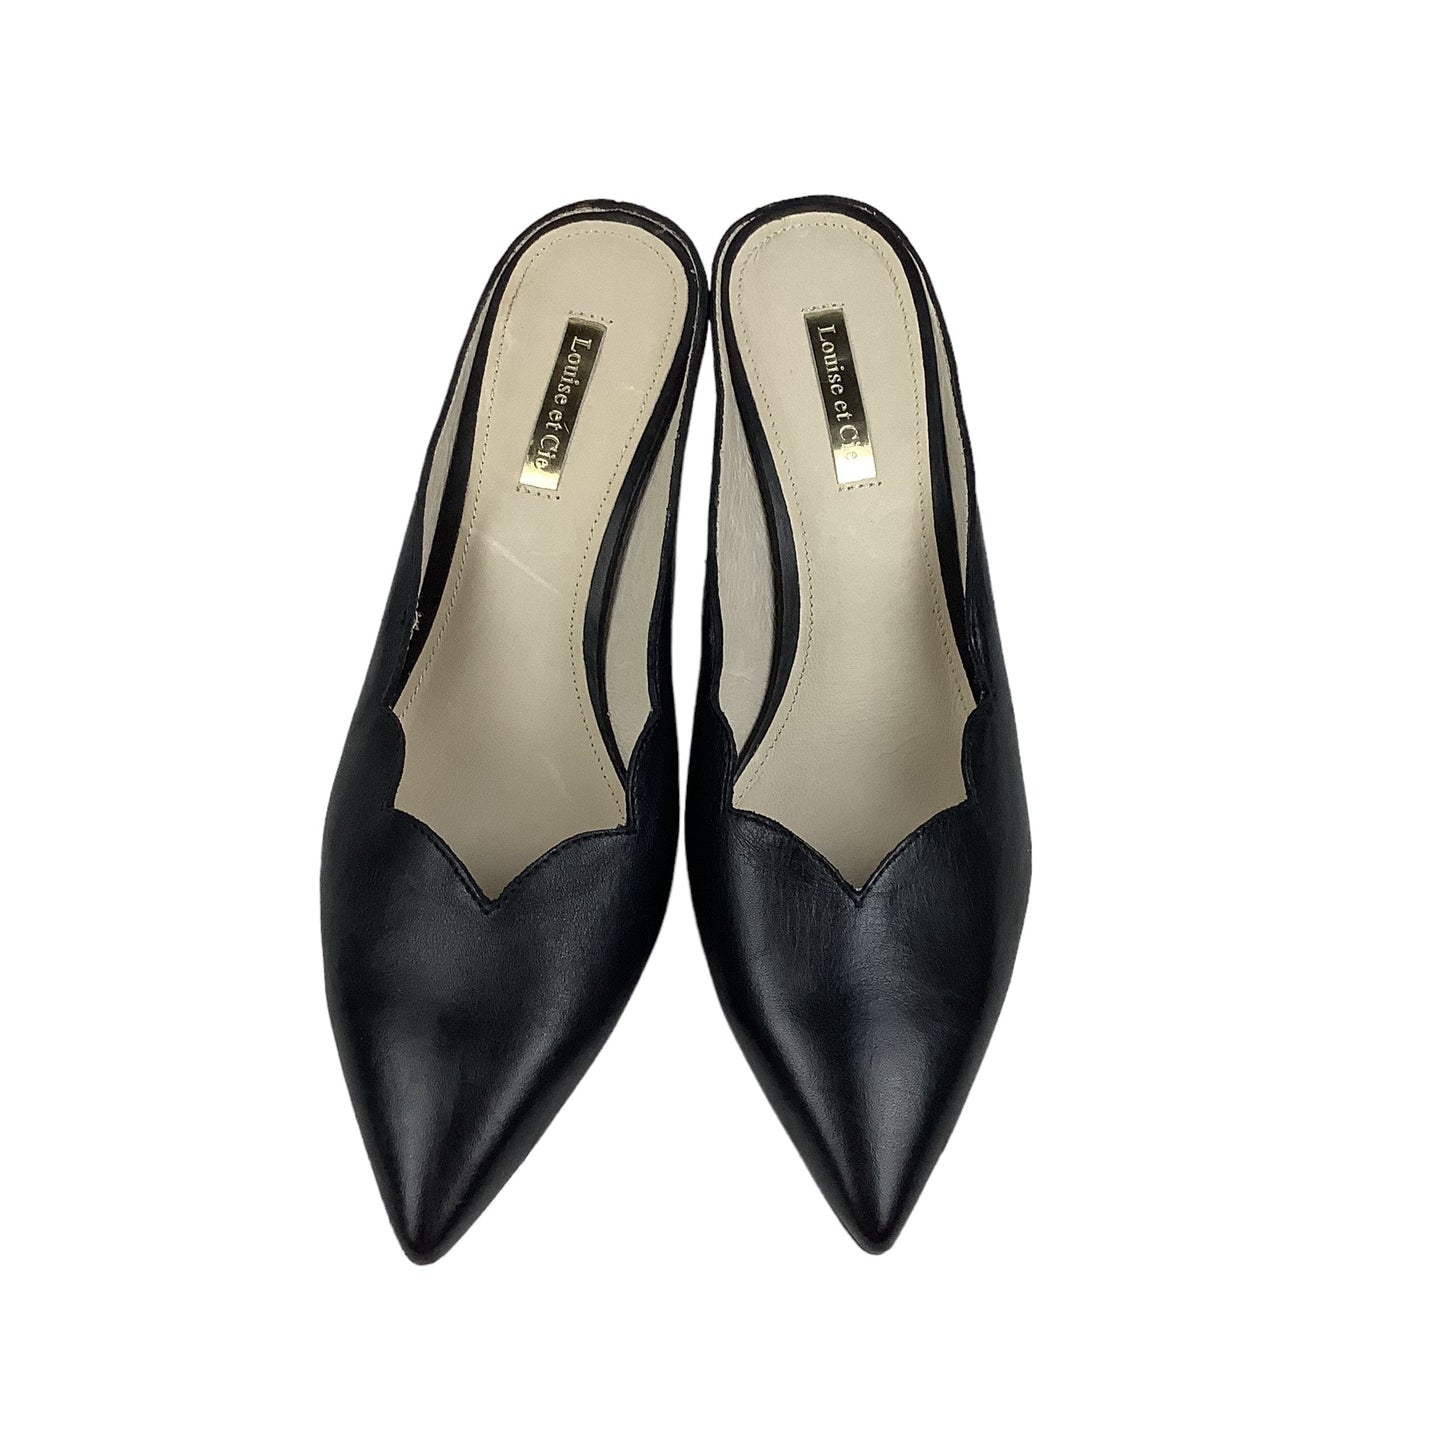 Shoes Heels Stiletto By Louise Et Cie  Size: 9